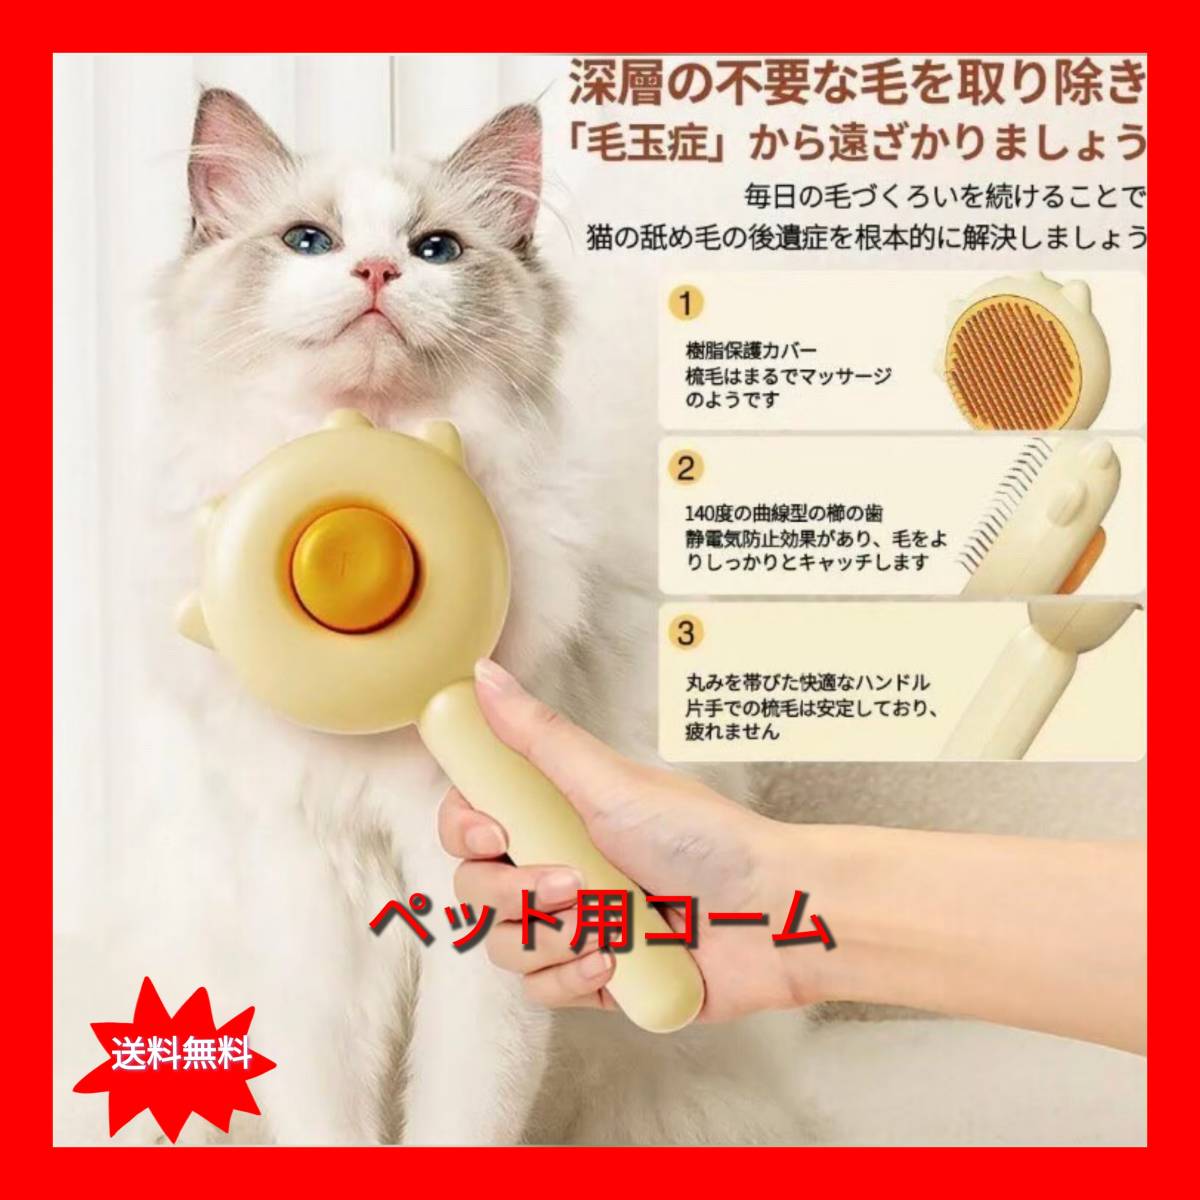 Petcom Hair Crash Yellow Cat Dog One Touch Popular Popular Higrom для домашнего животного